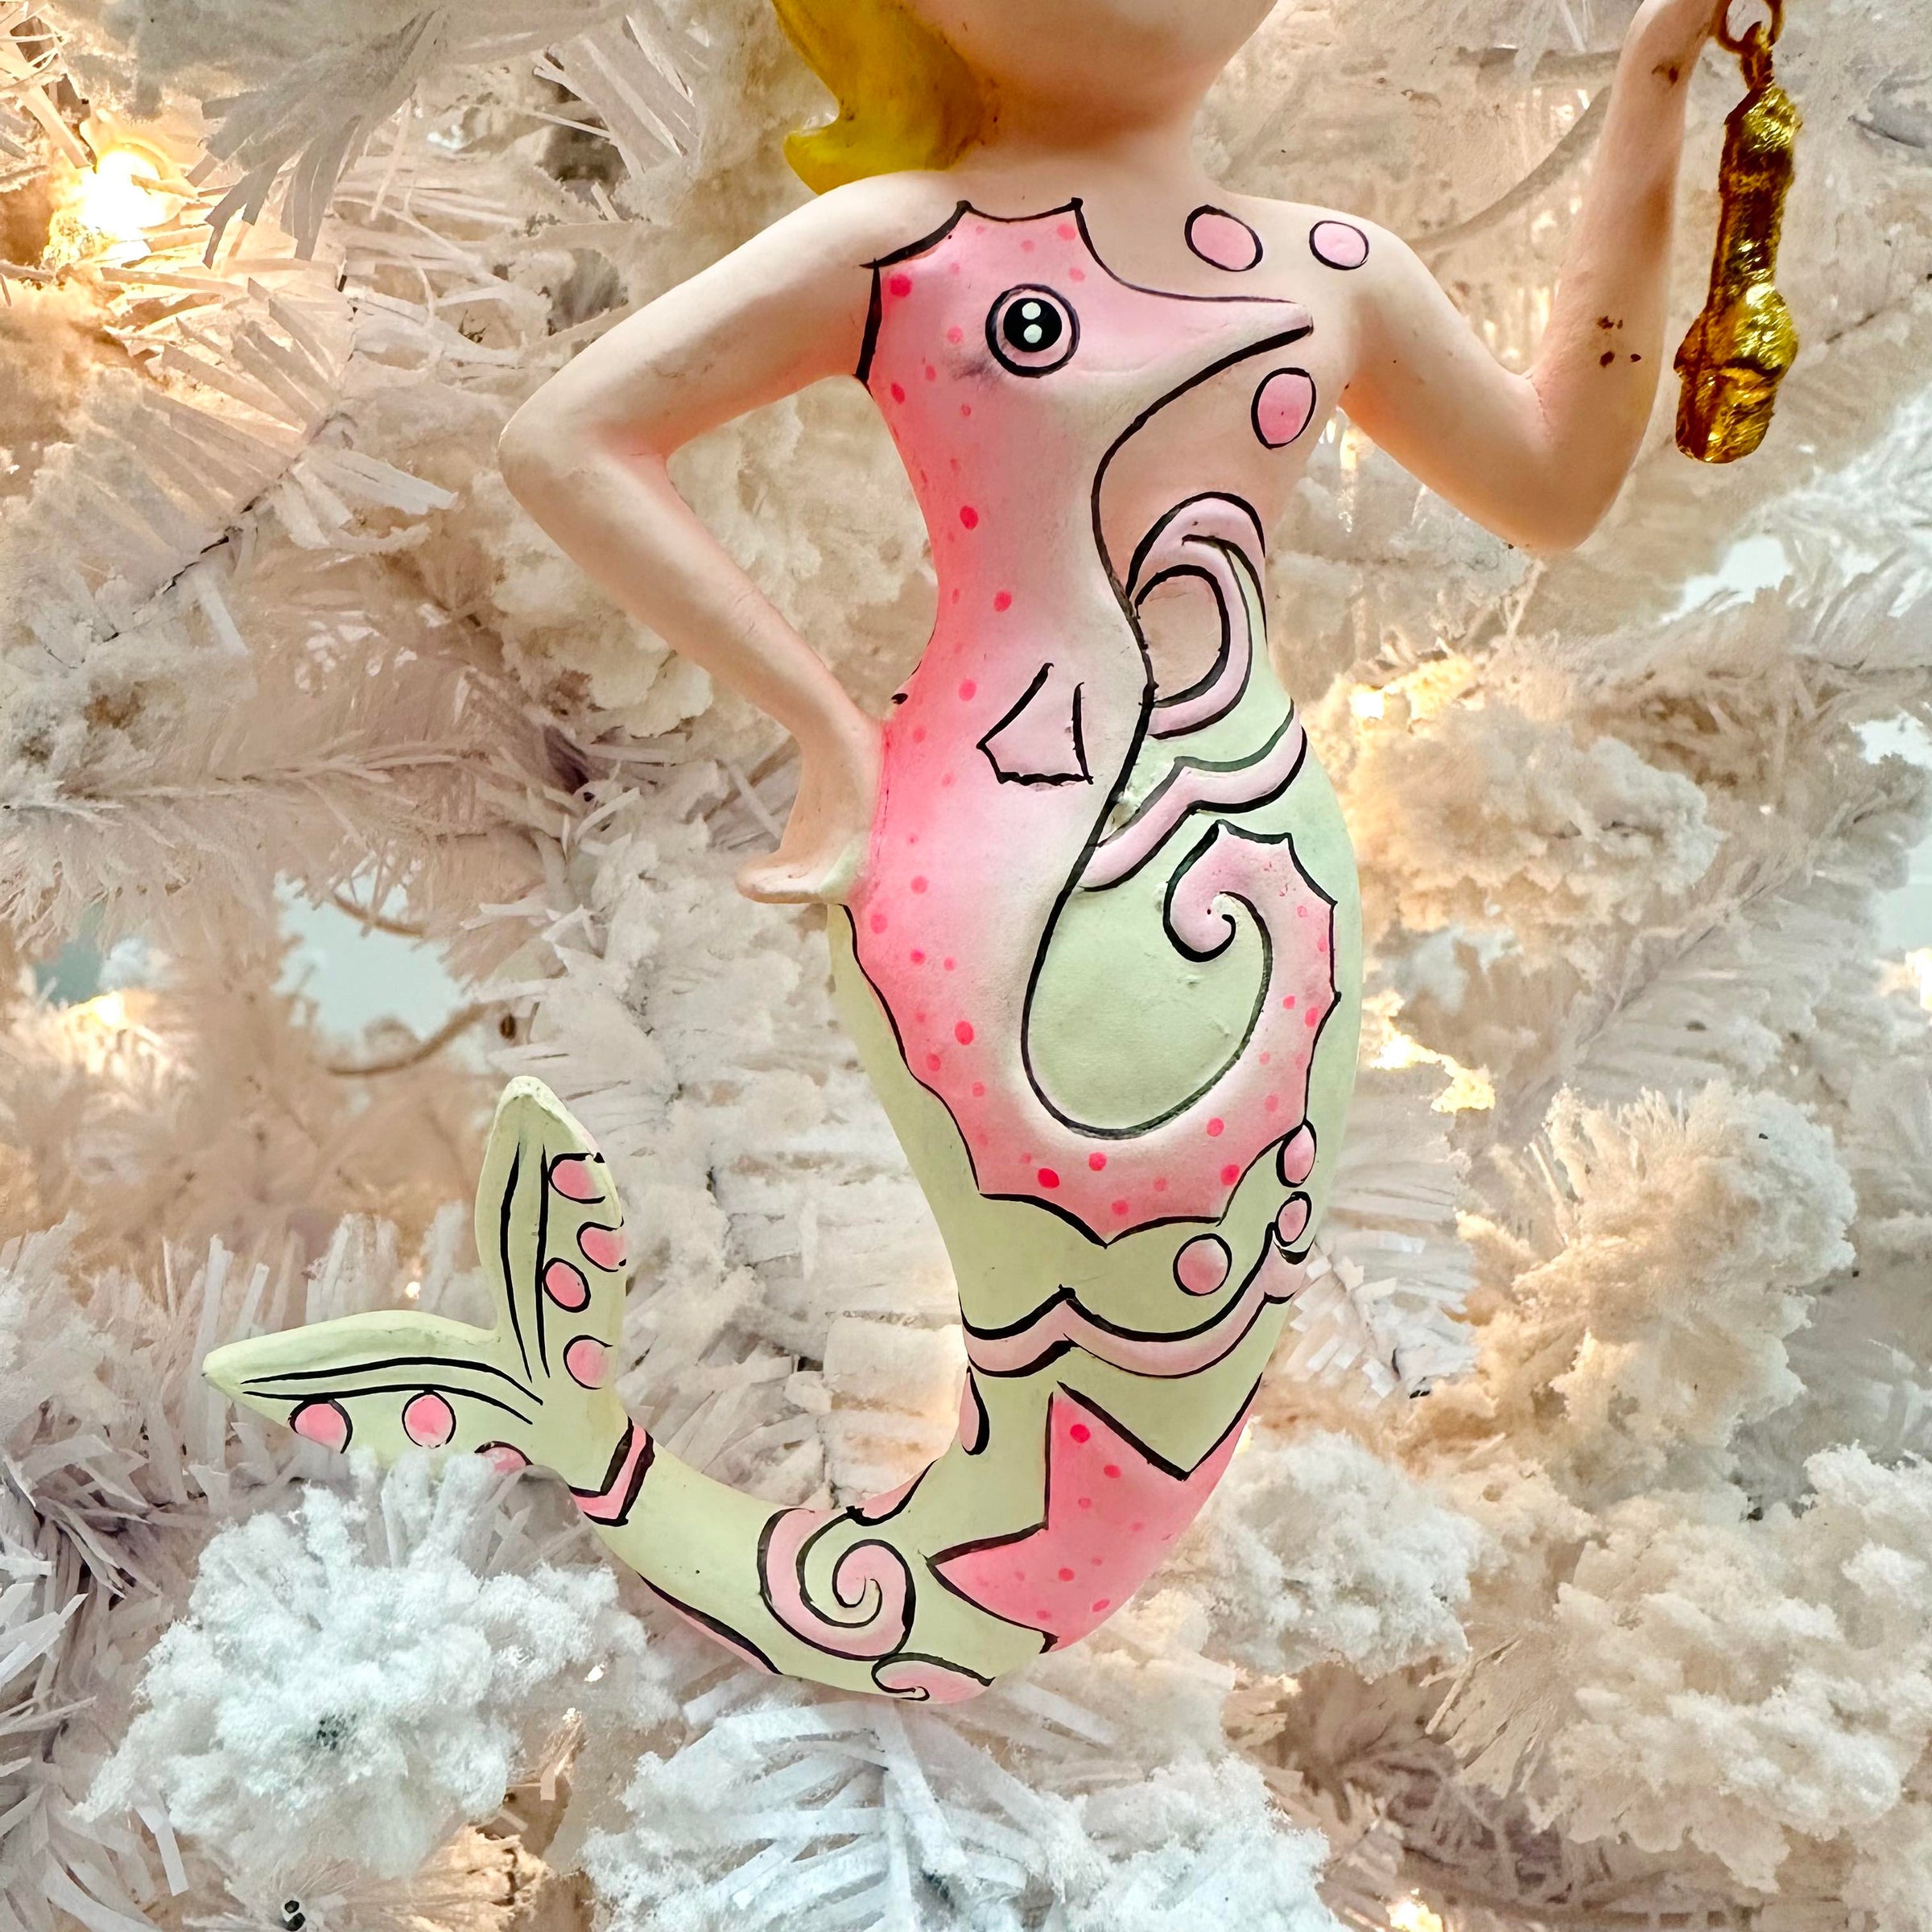 Mermaid Queen Holding Anchor Ornament